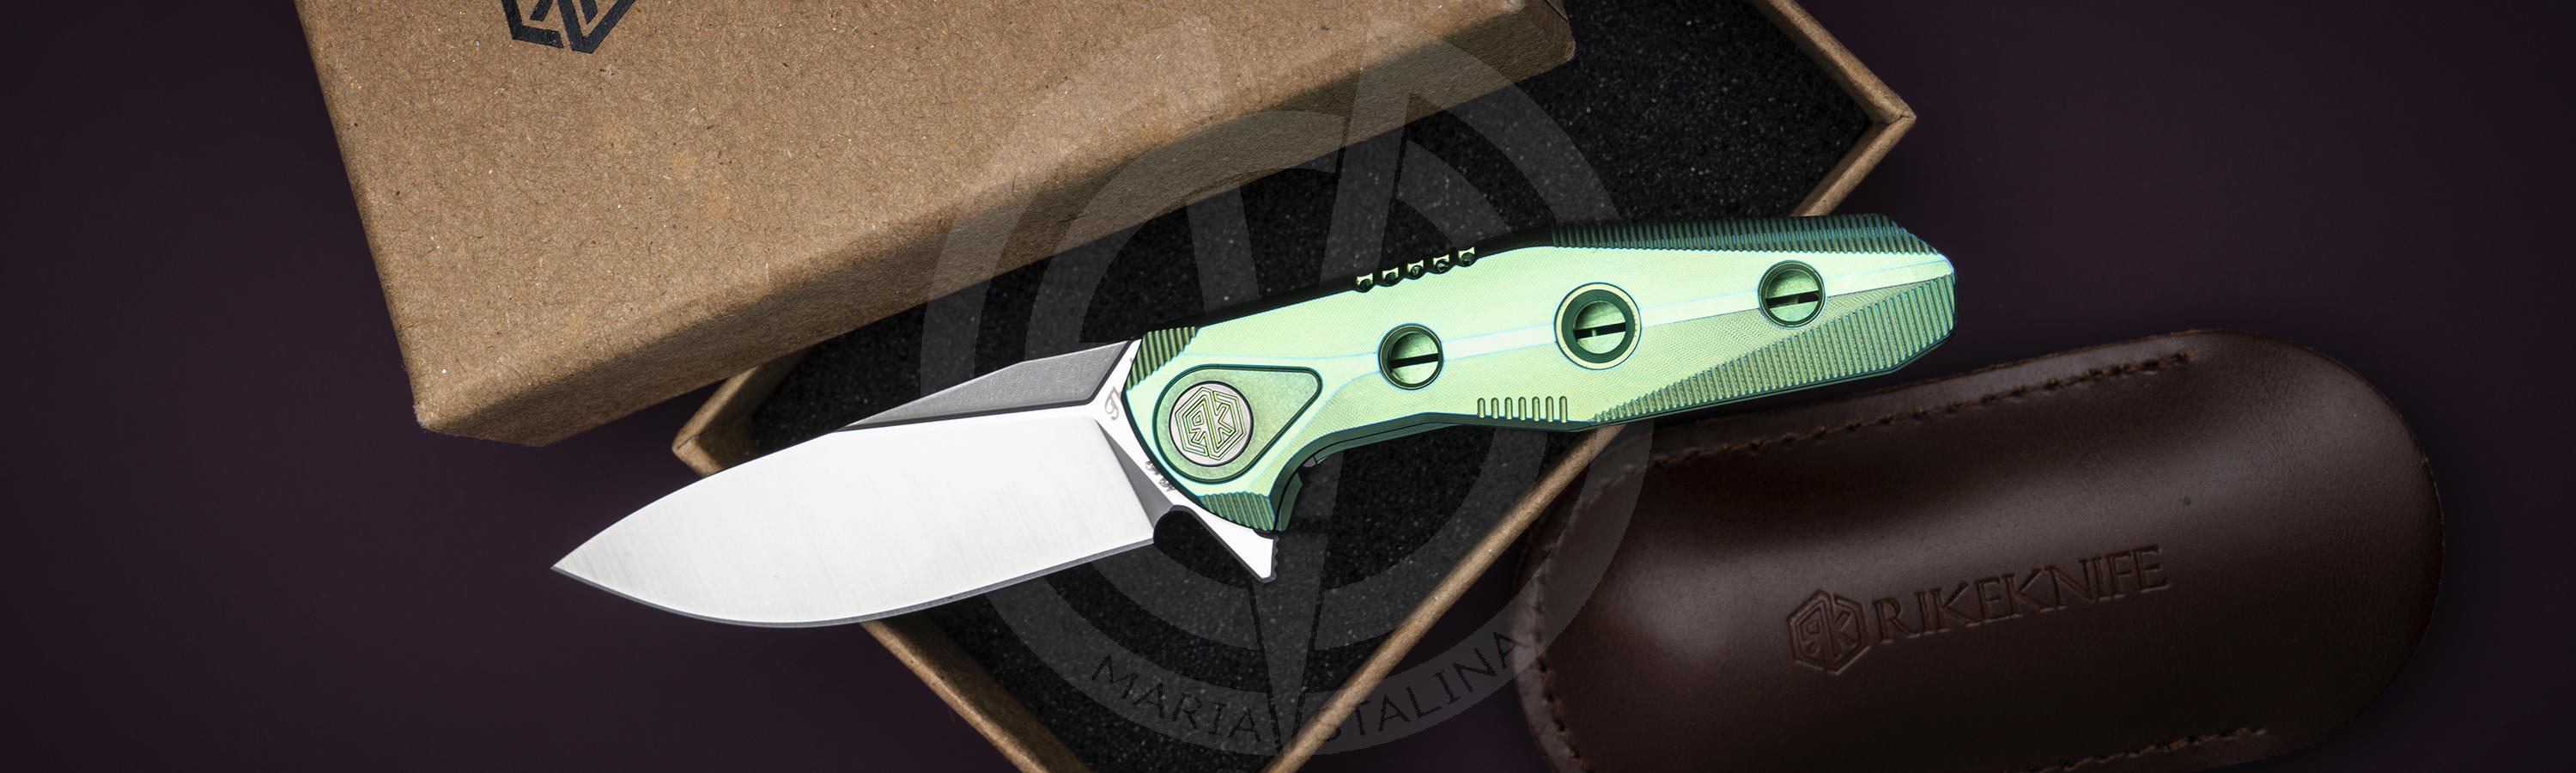 Нож Rike Knife Thor4s Green